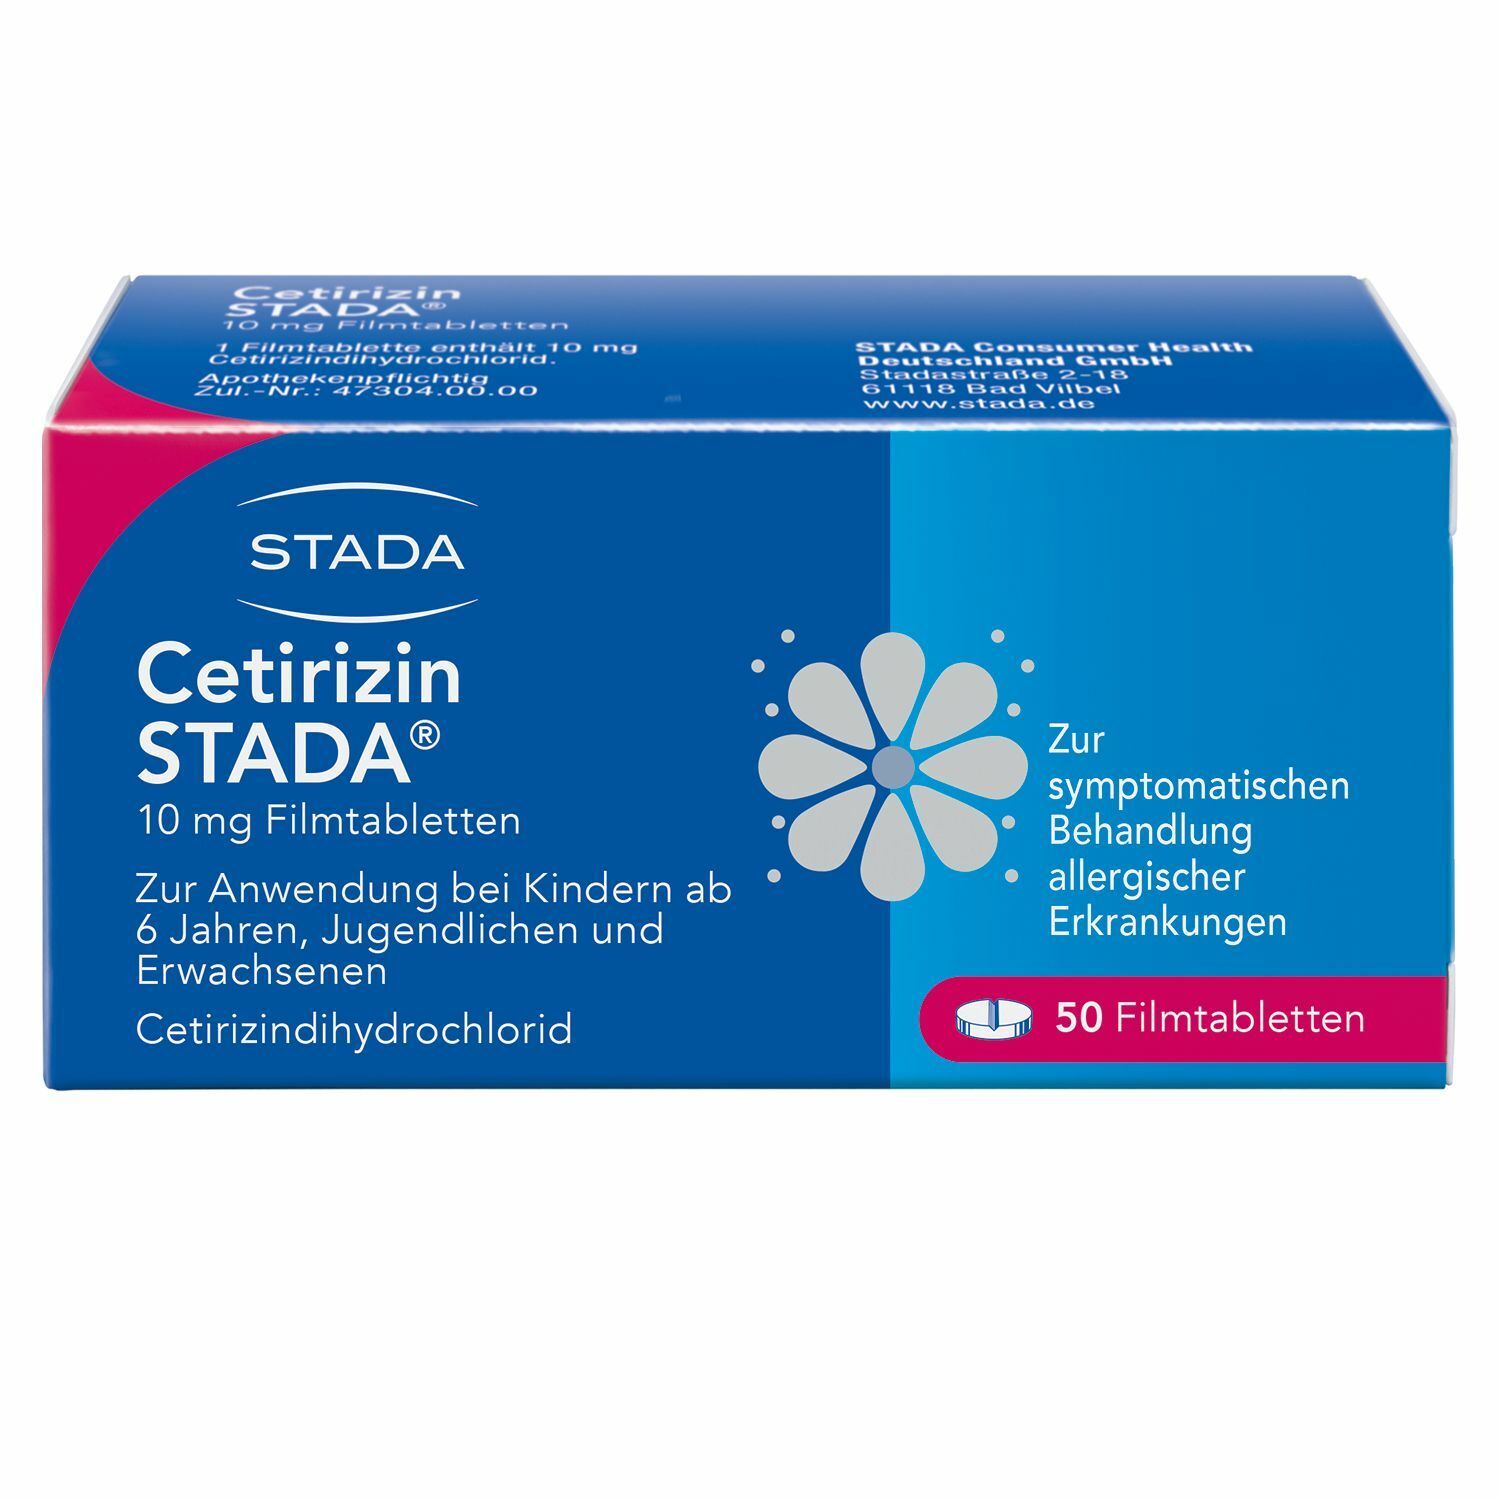 Cetirizin STADA® 10 mg Filmtabletten bei Allergien